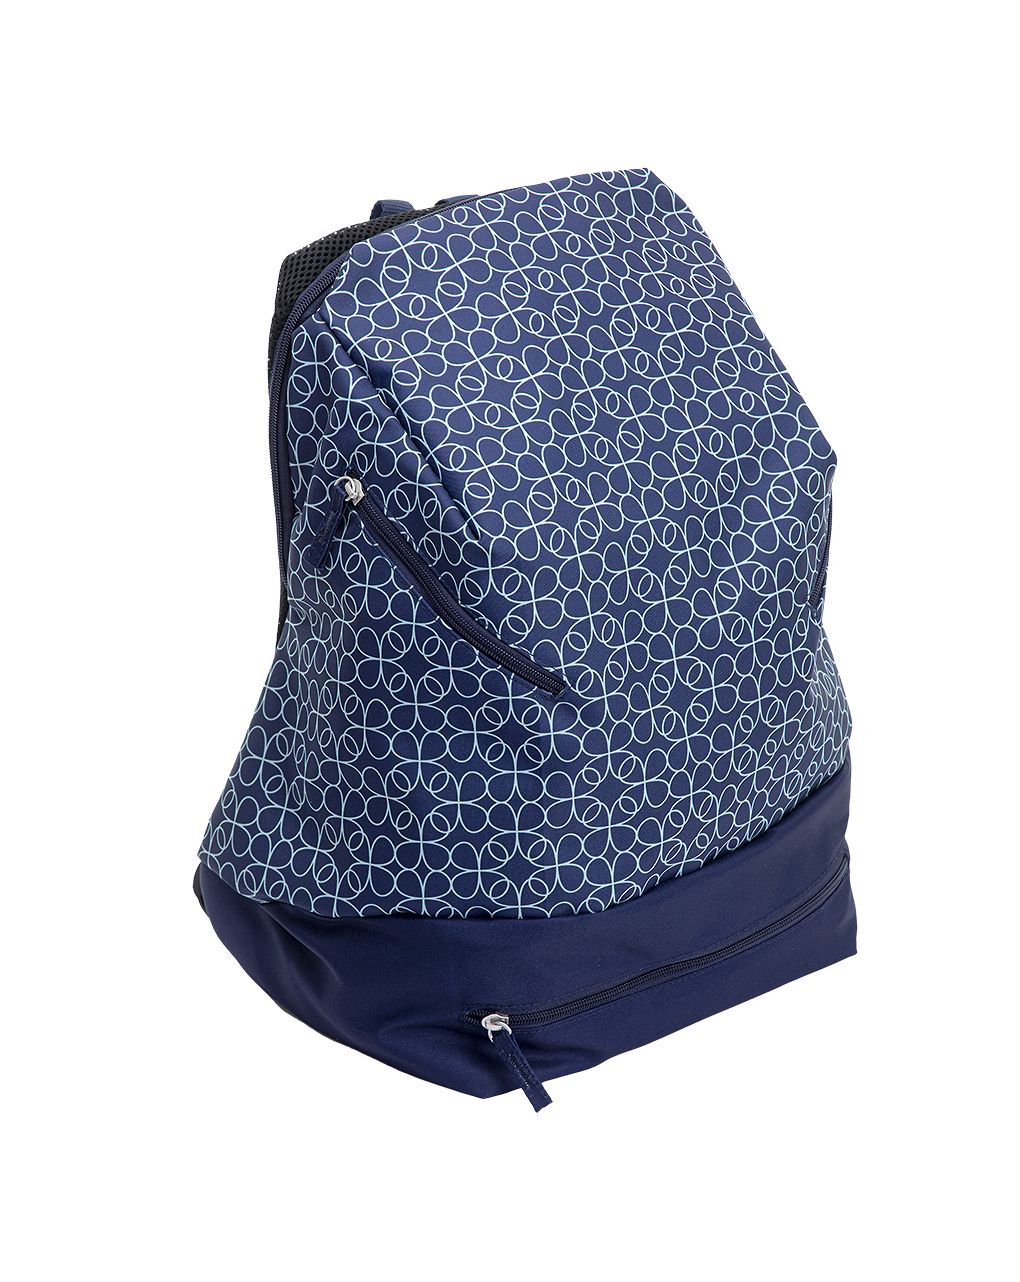 Mochila smart daypack blue - Giordani